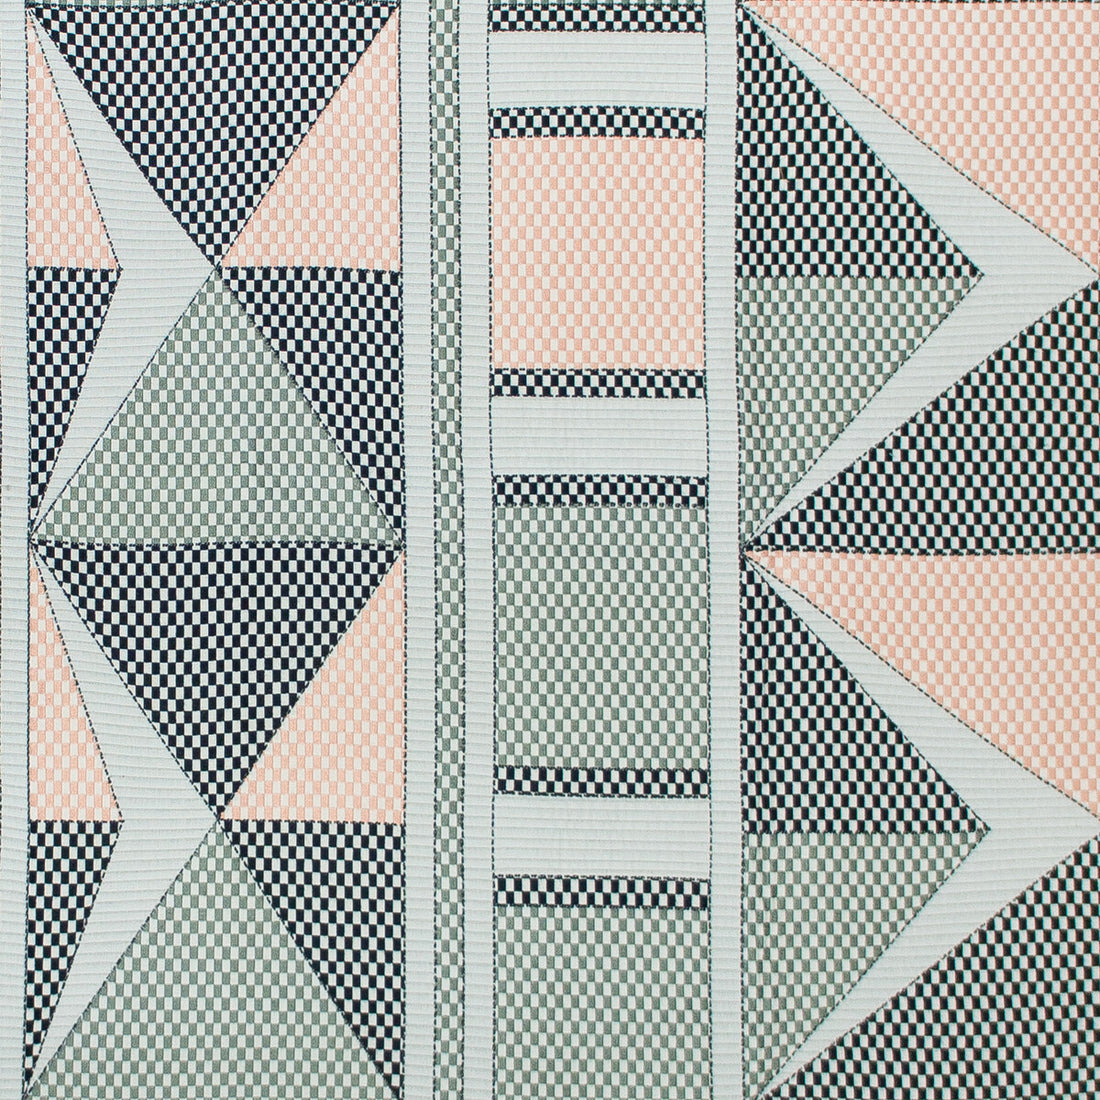 Buena Esperanza fabric in gris/rosa color - pattern GDT5588.001.0 - by Gaston y Daniela in the Gaston Nuevo Mundo collection